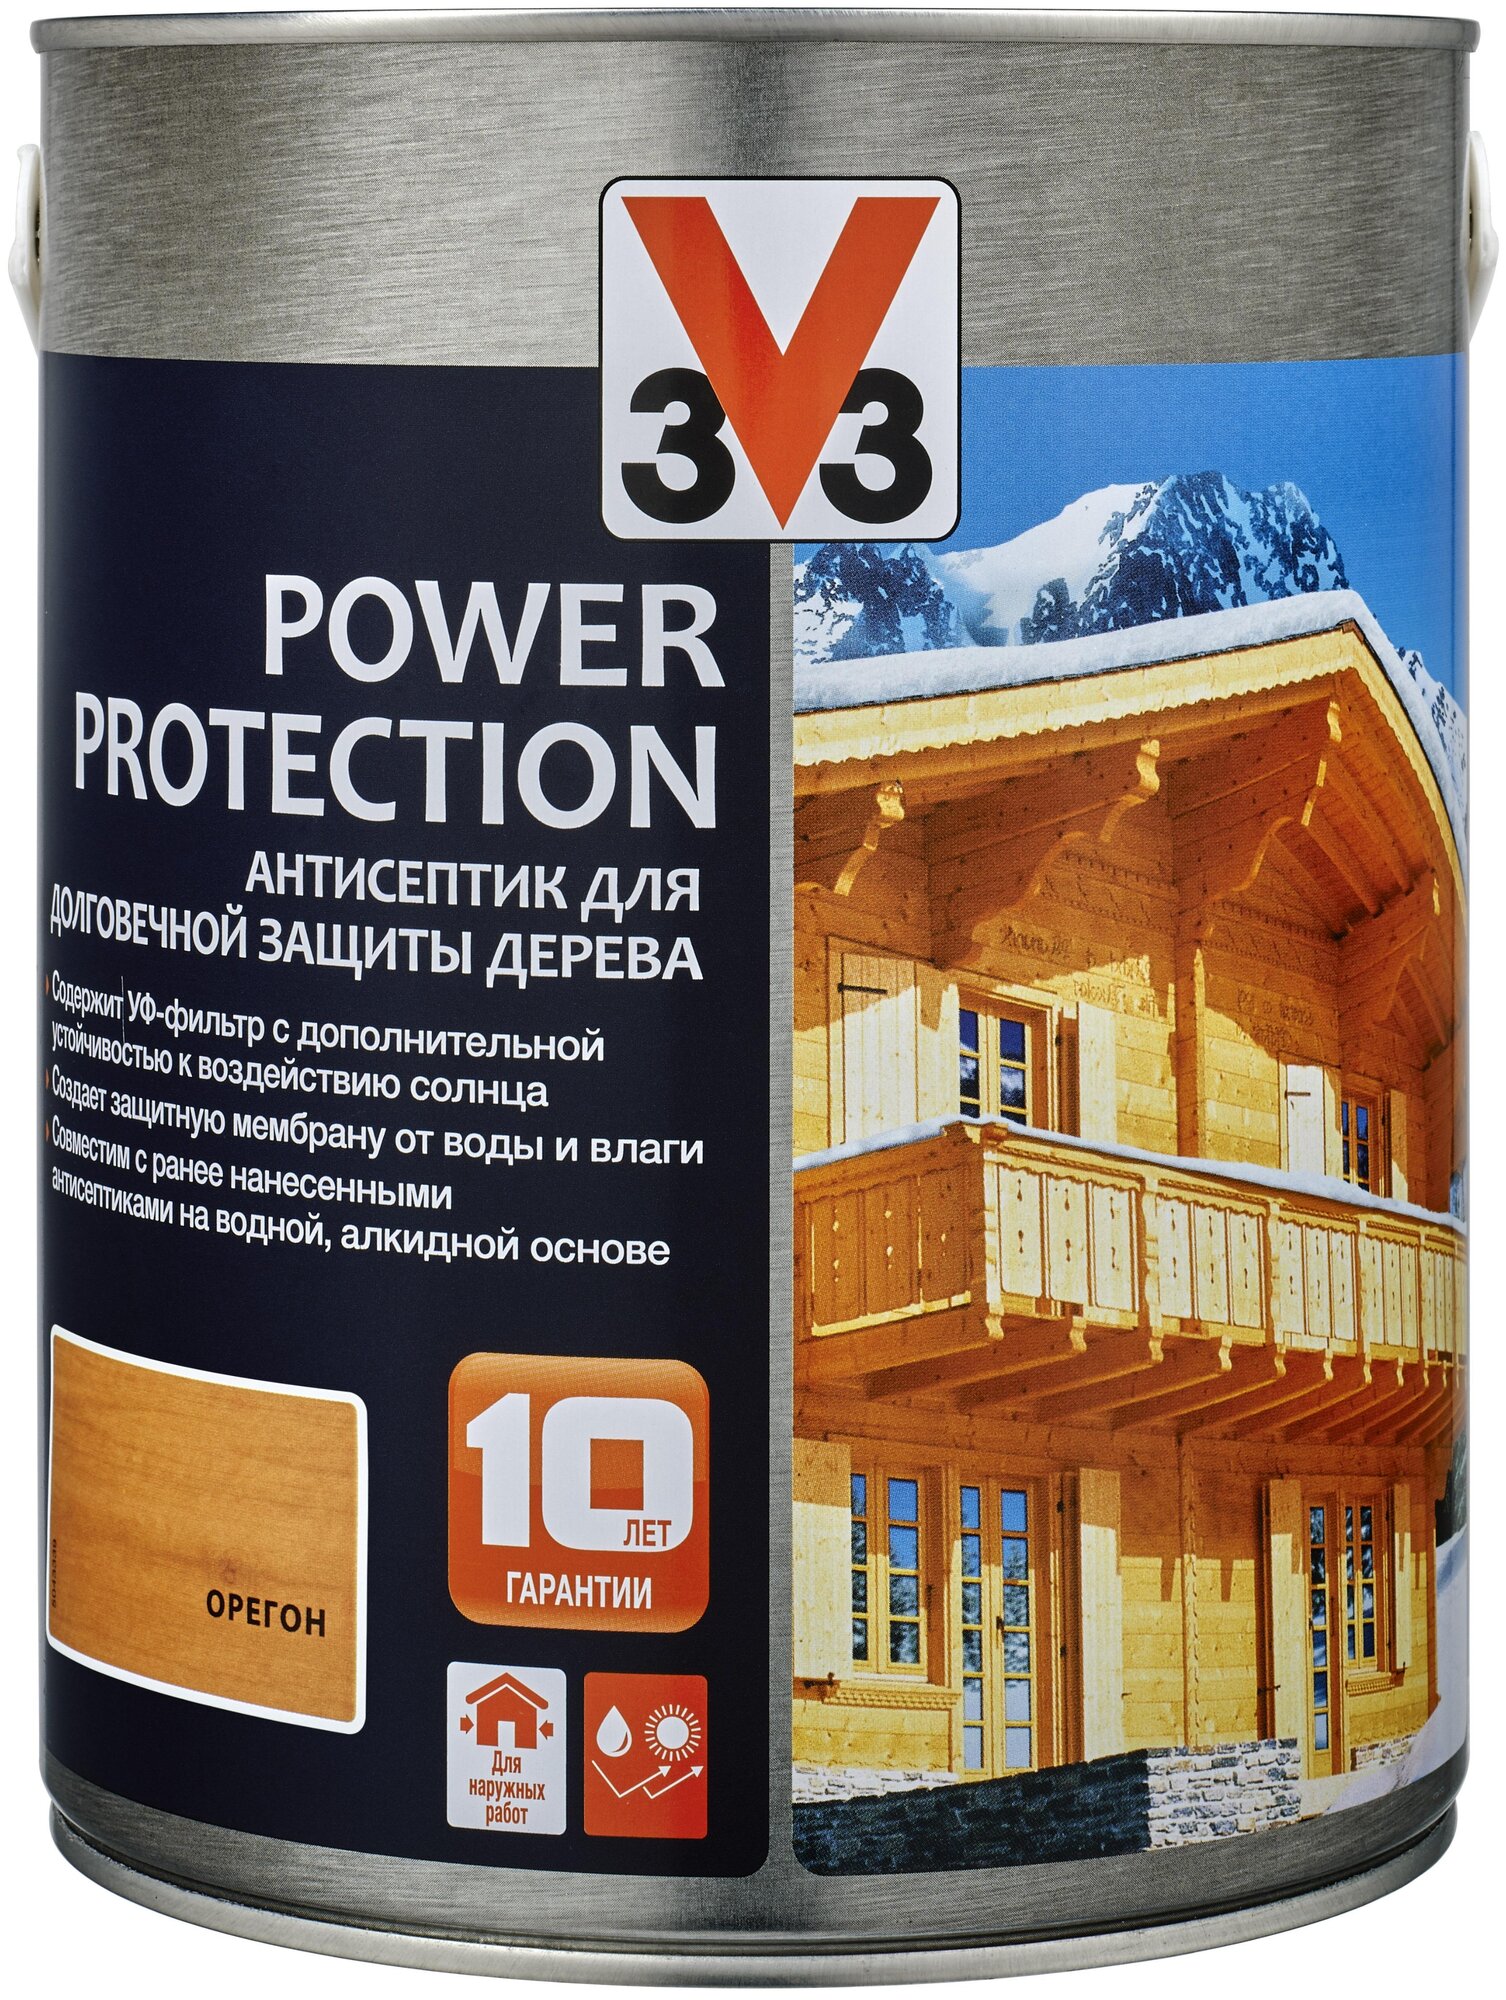 V33 антисептик Power Protection